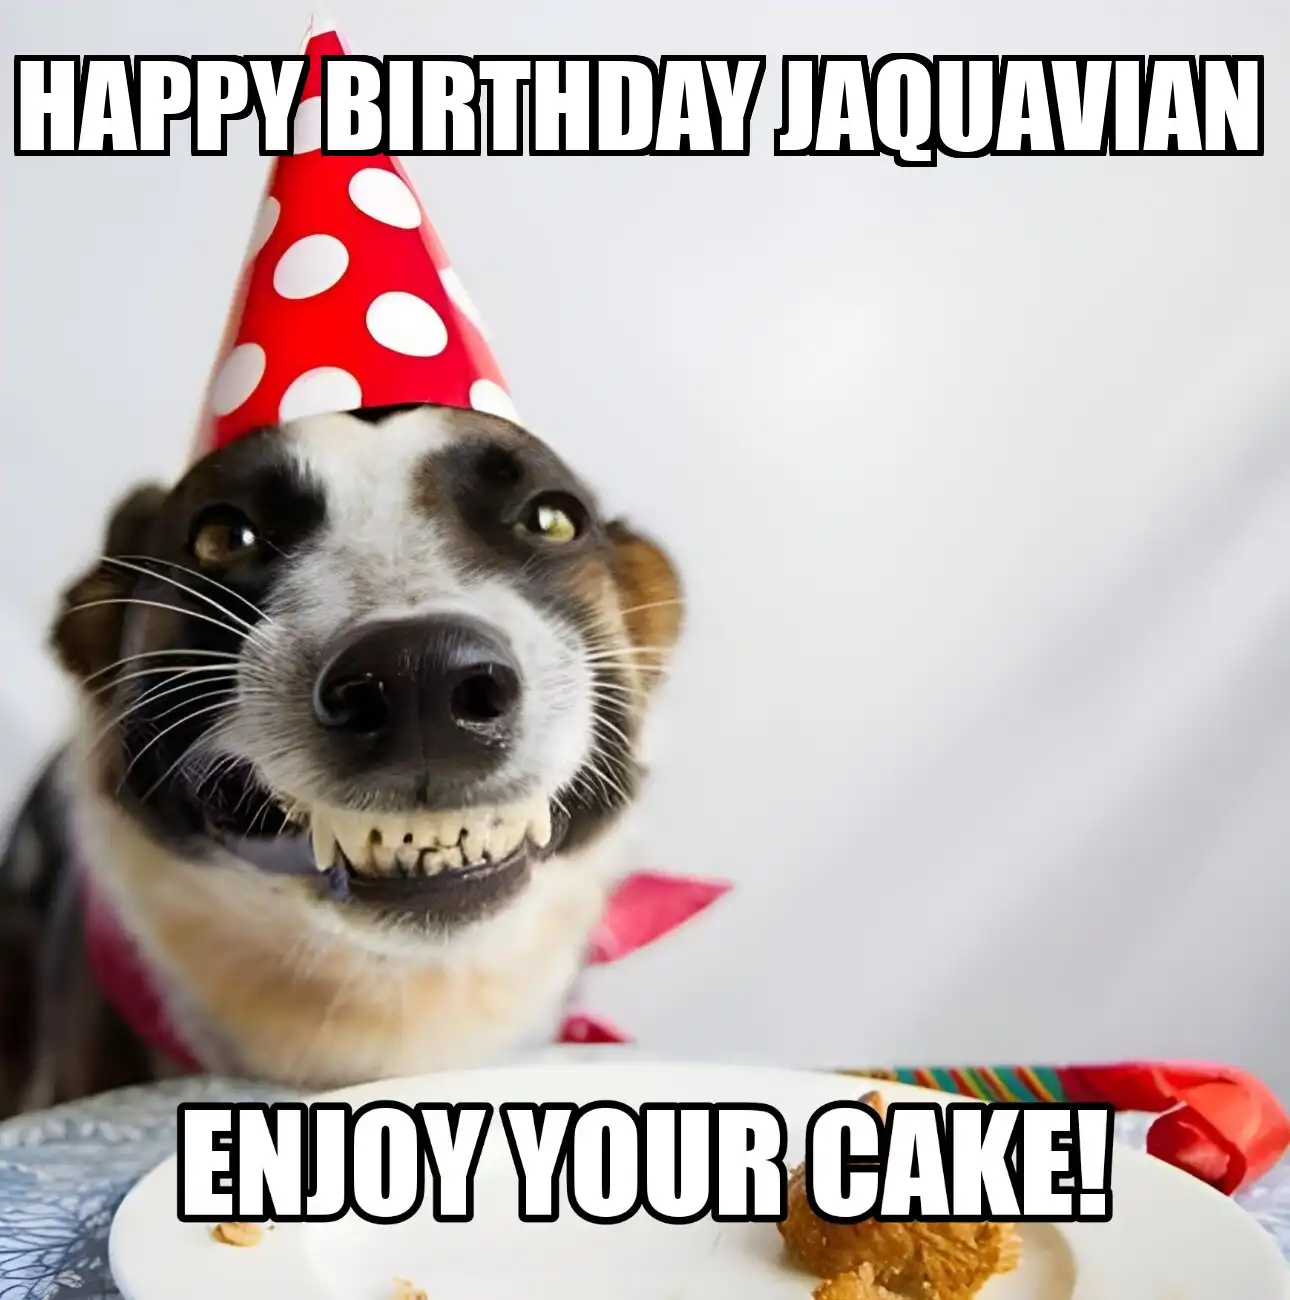 Happy Birthday Jaquavian Enjoy Your Cake Dog Meme